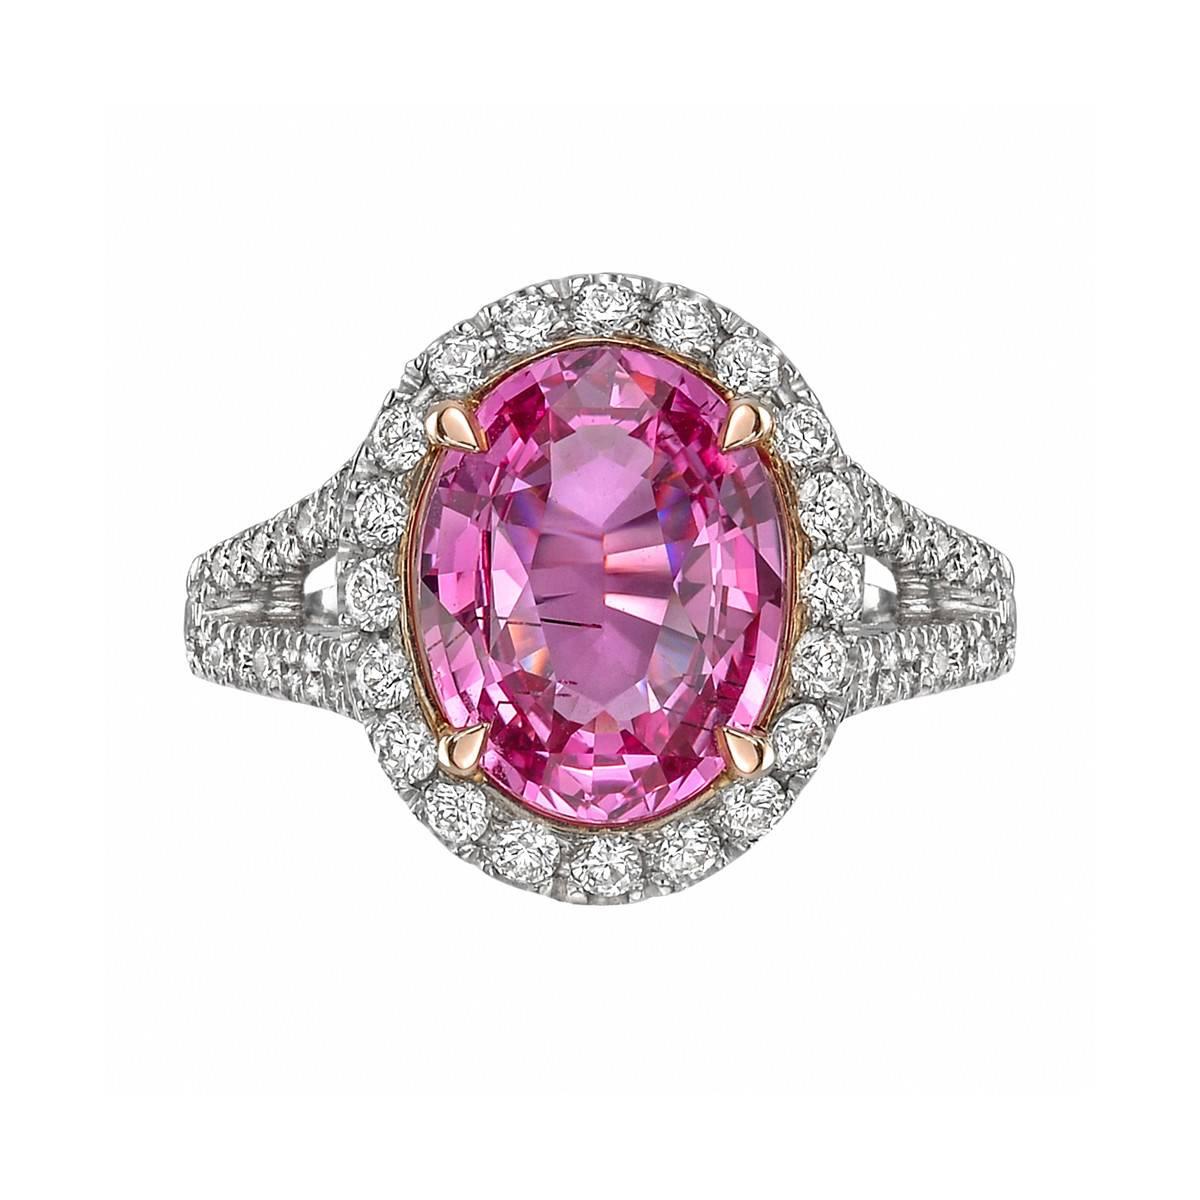 3.81 Carat Pink Sapphire and Diamond Ring